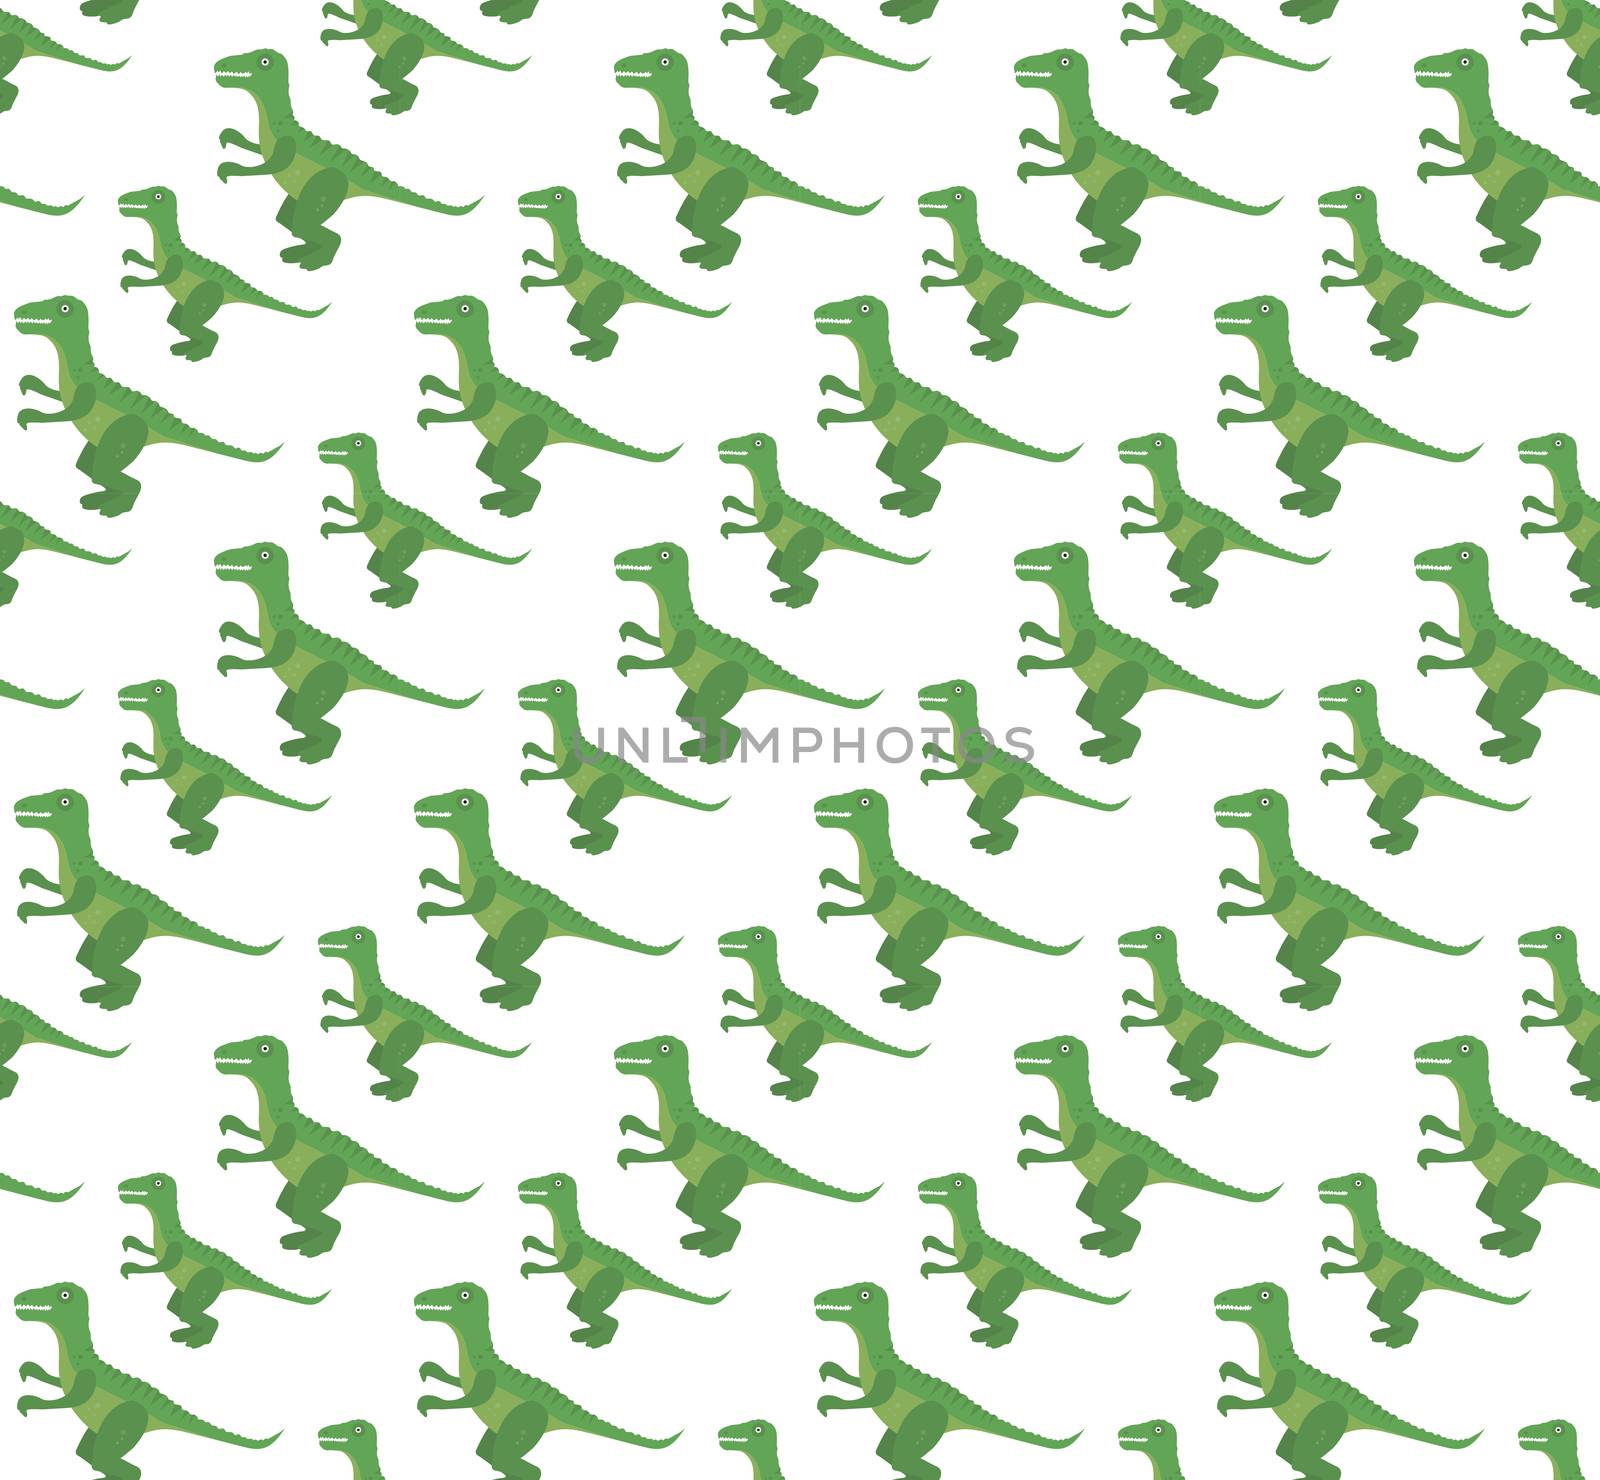 Tyrannosaurus seamless pattern. Dinosaur endless texture, repeating background.